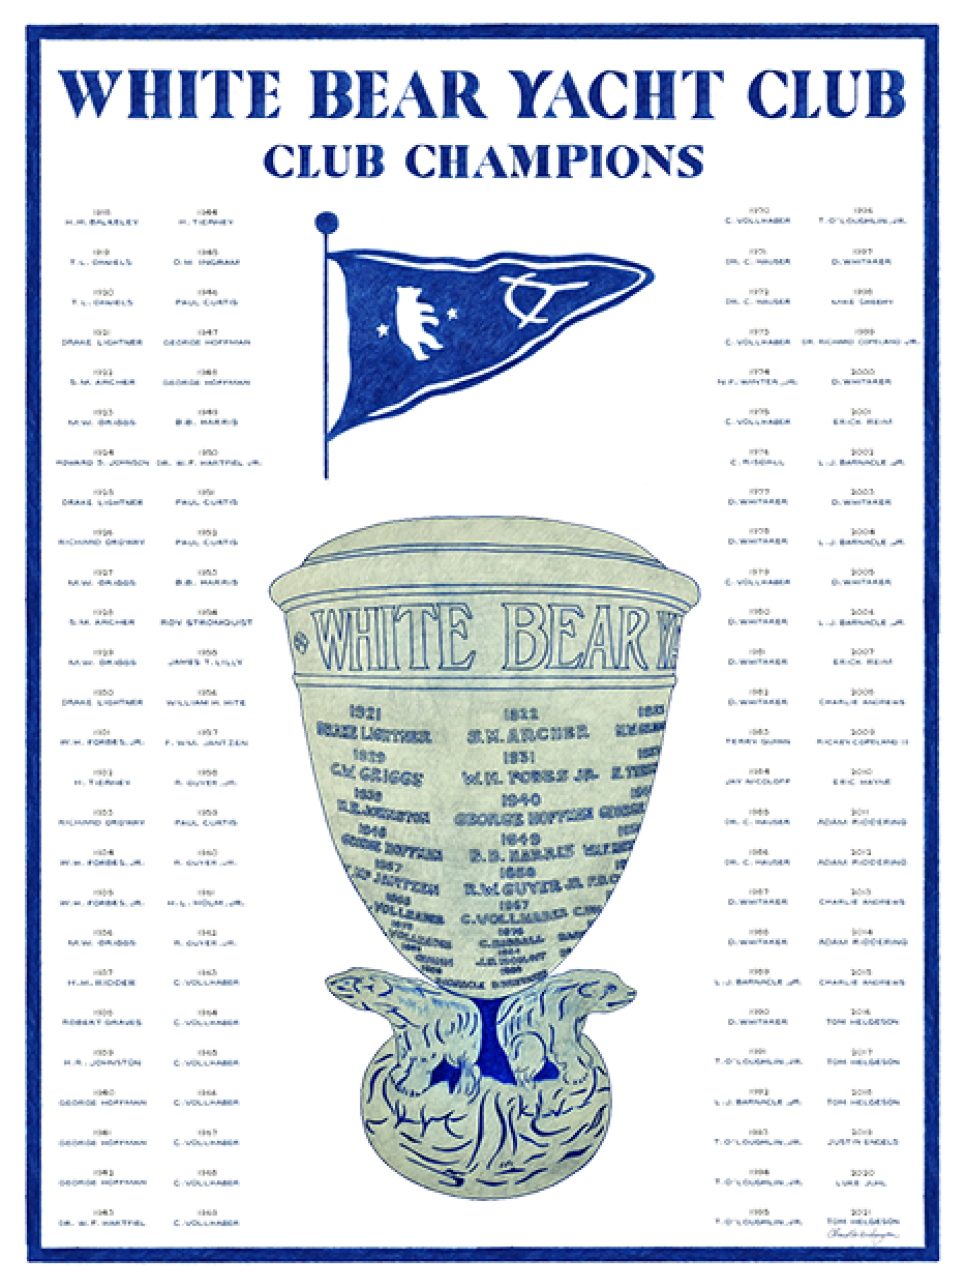 White Bear Yacht Club Champions